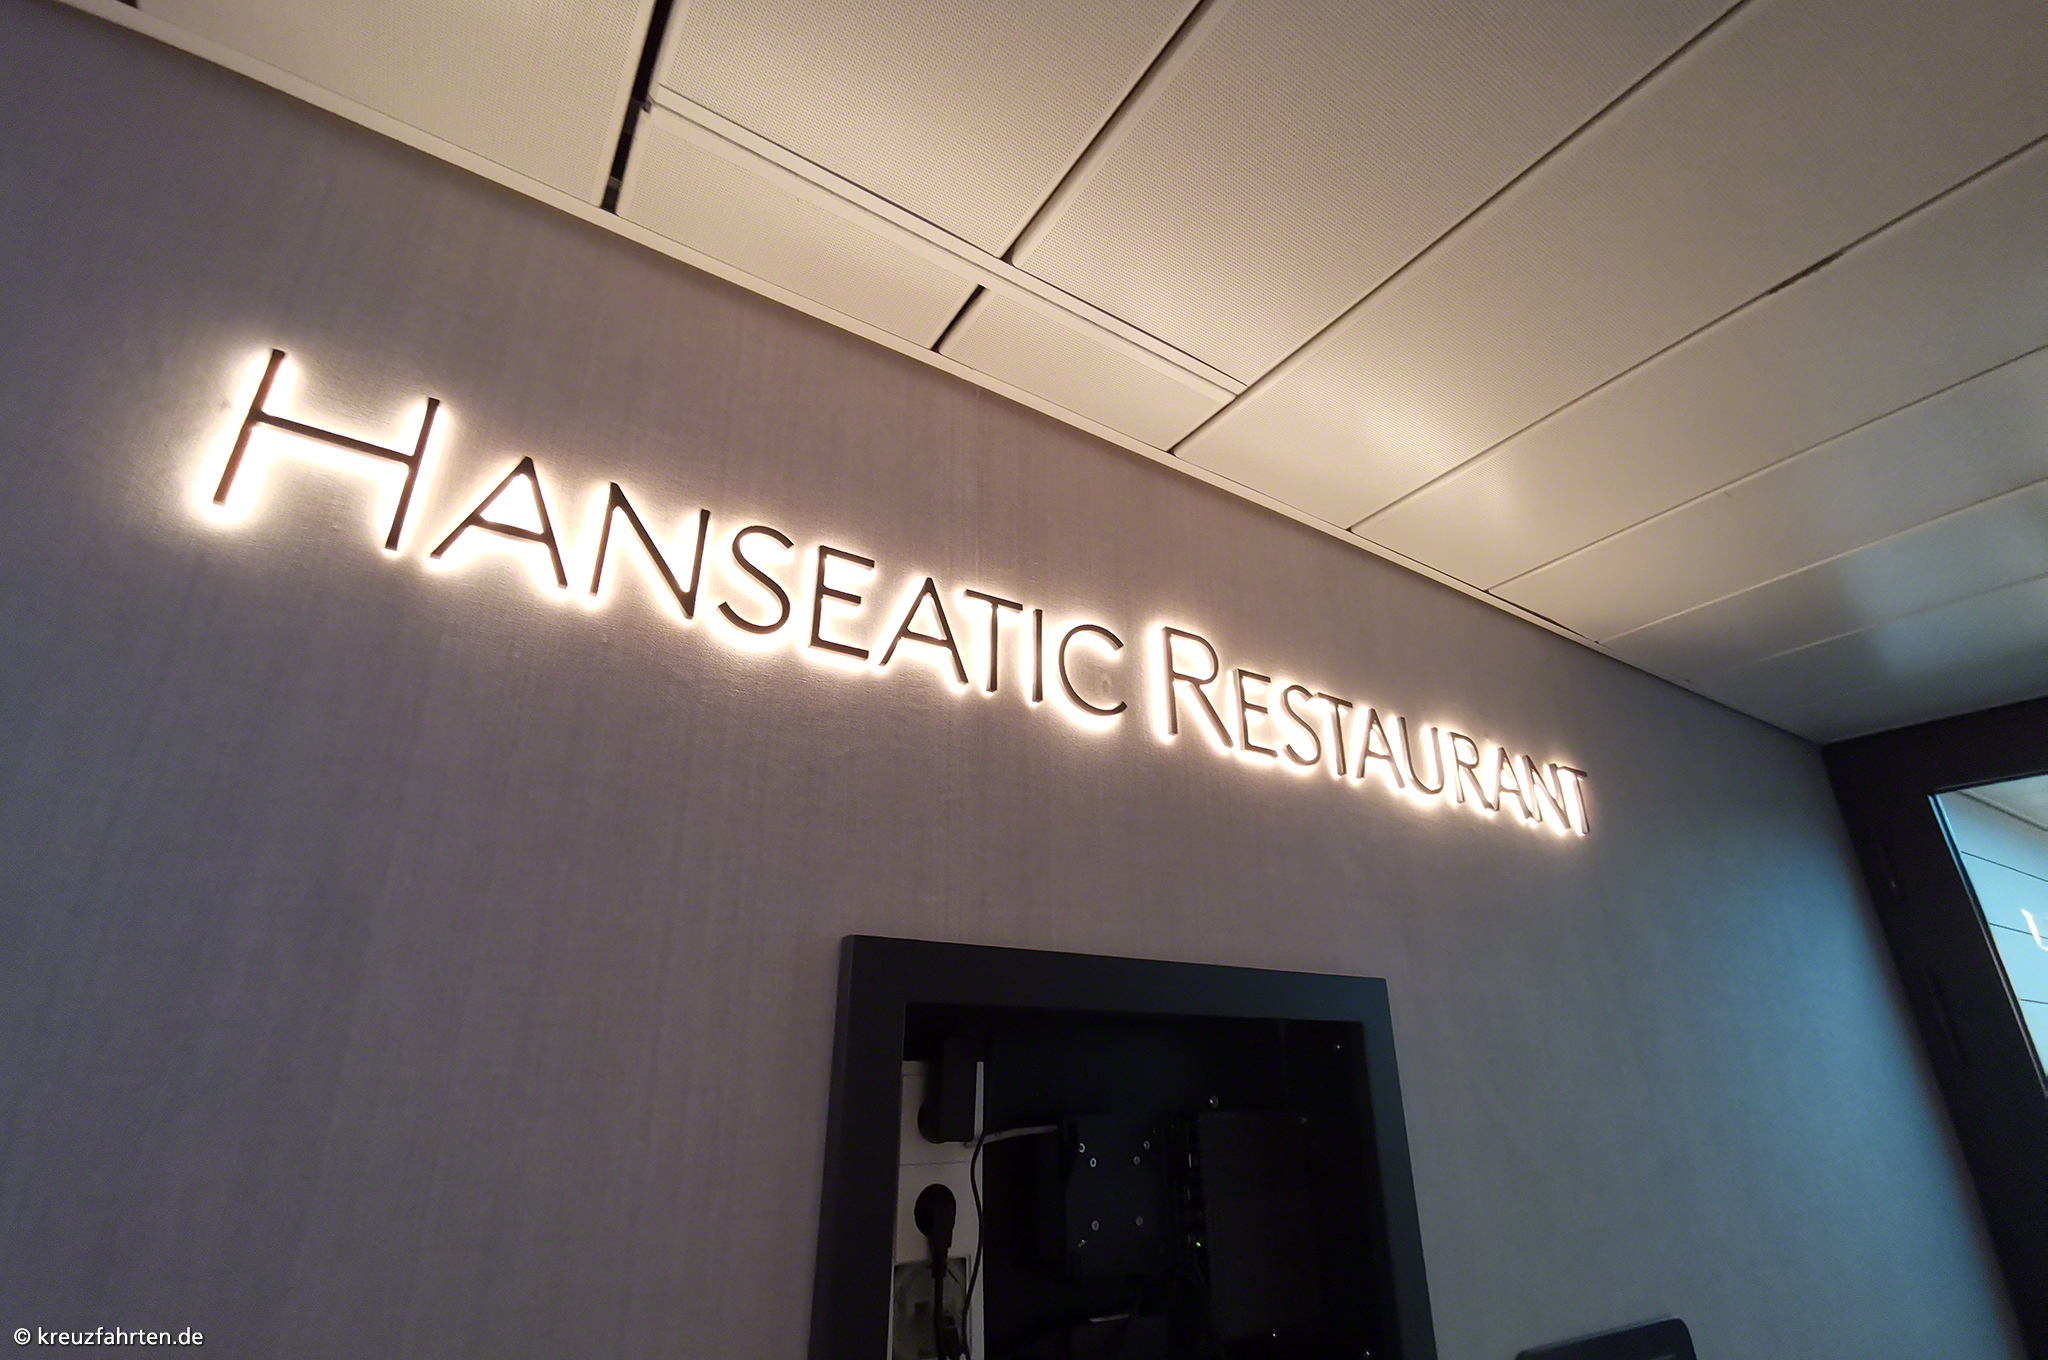 Hanseatic Restaurant